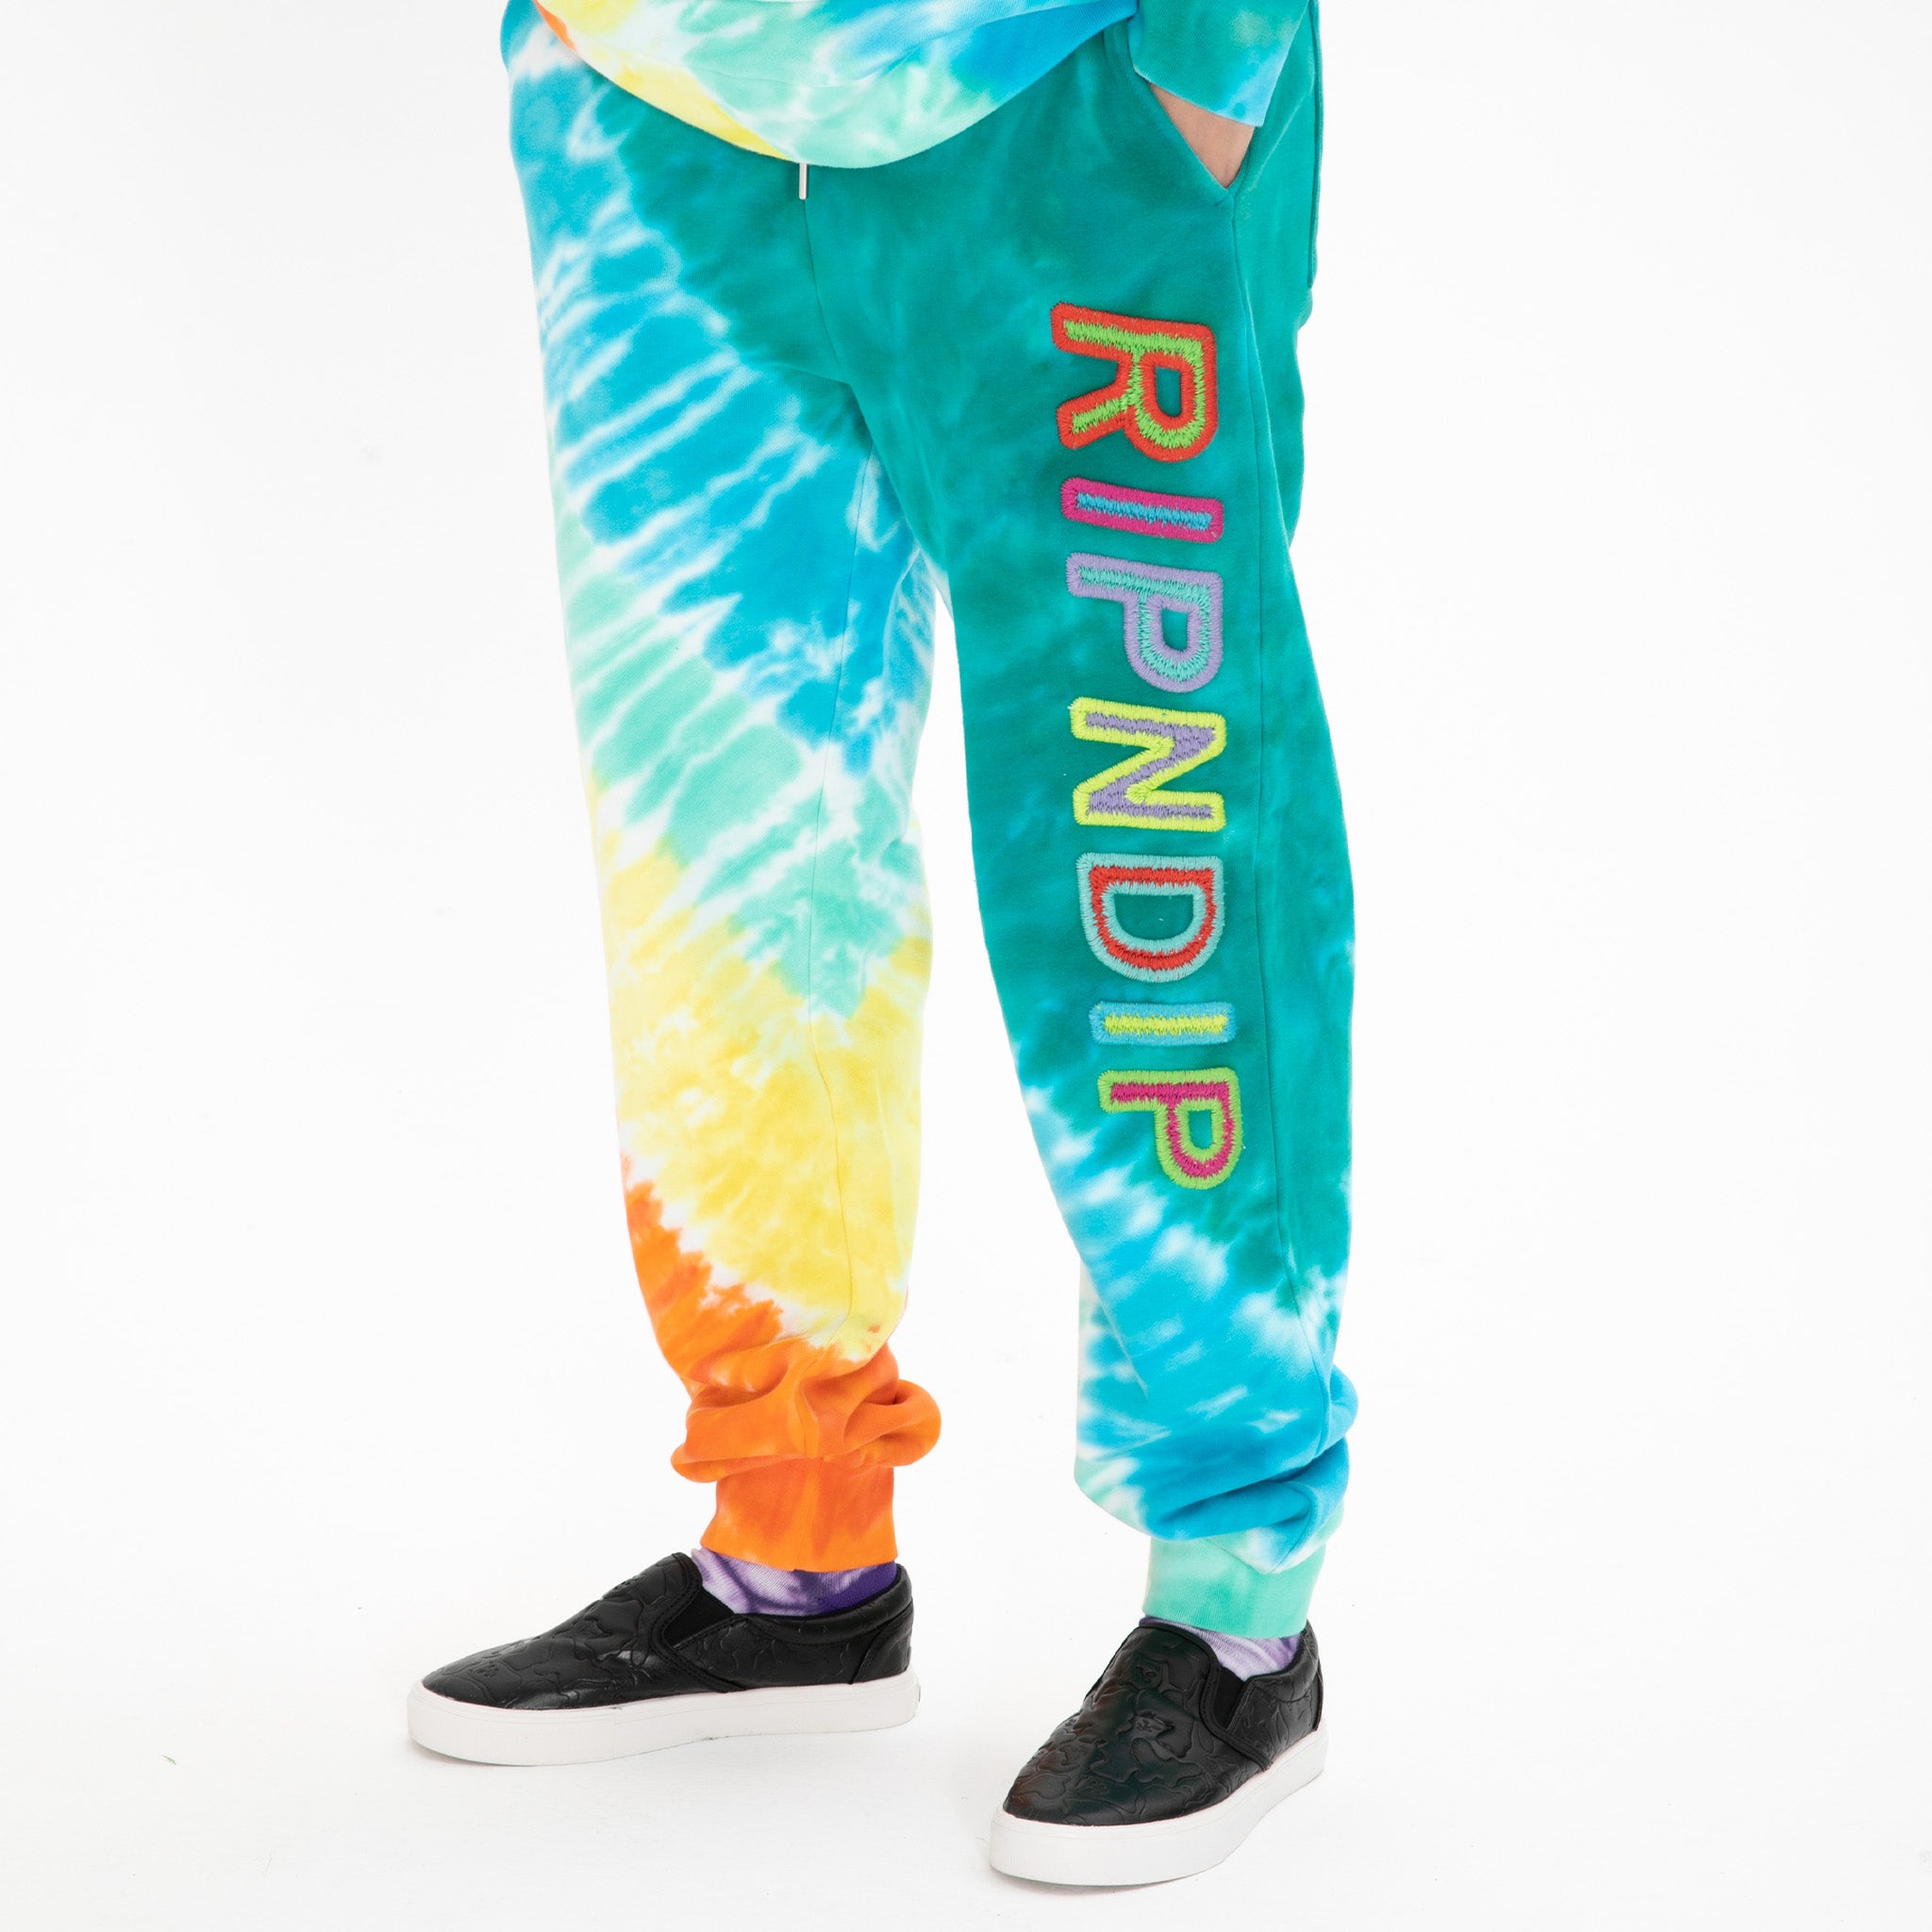 Prisma Sweatpants (Teal Rainbow Dye)